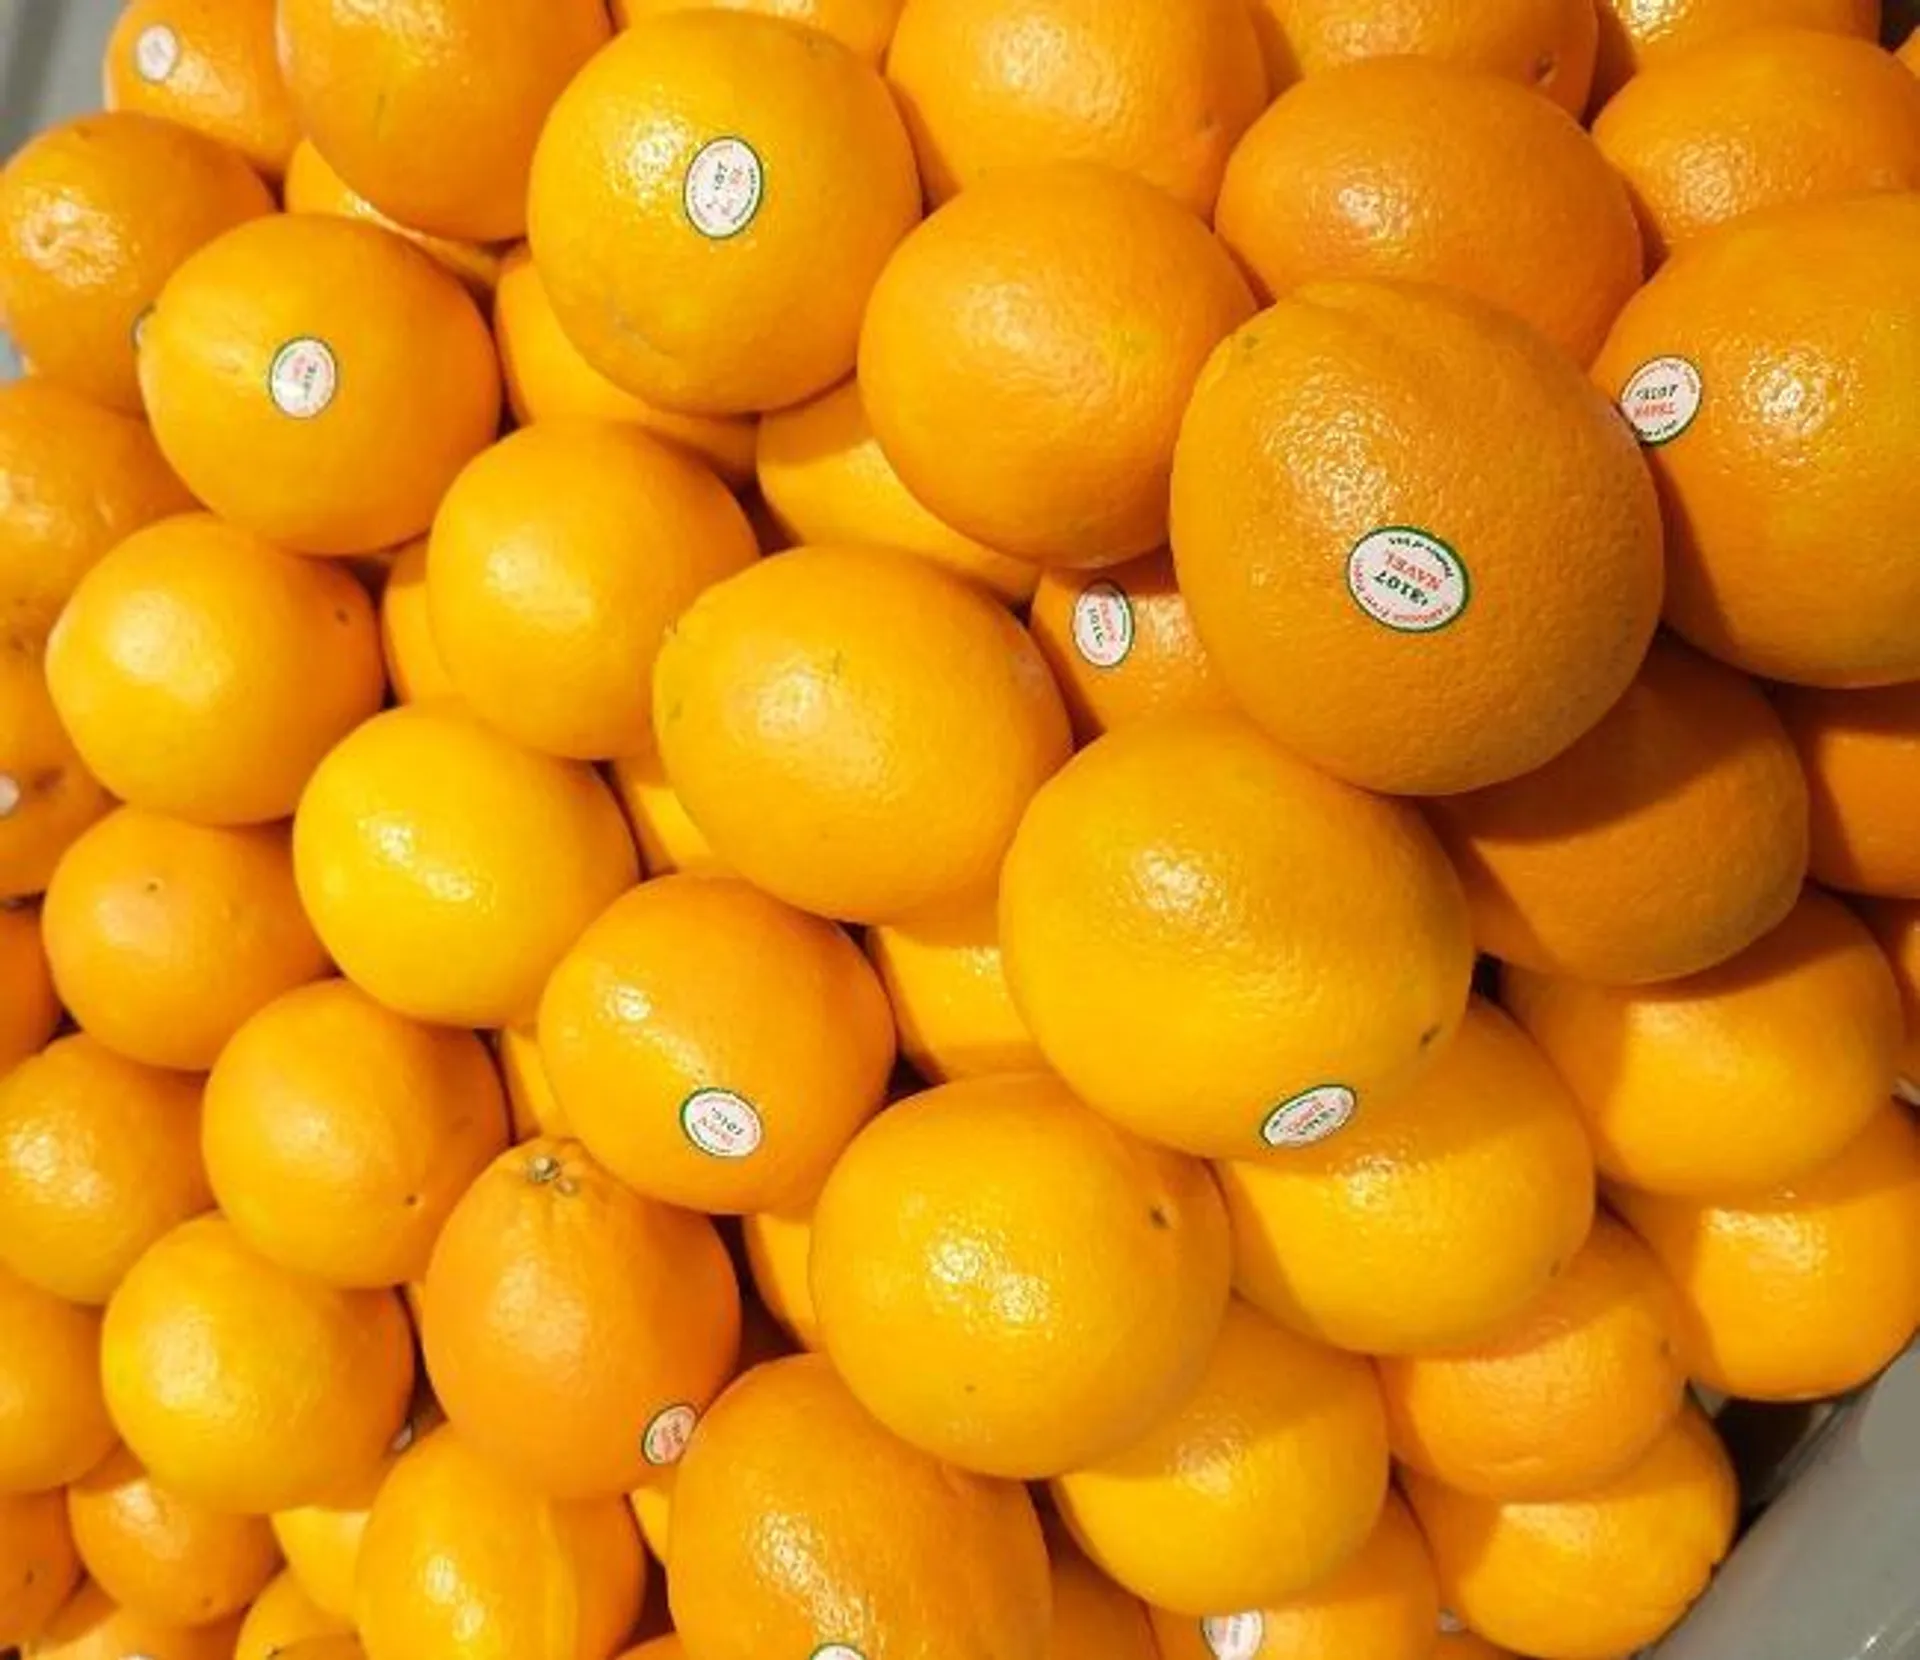 California orange (approx 3lb) - 1bag